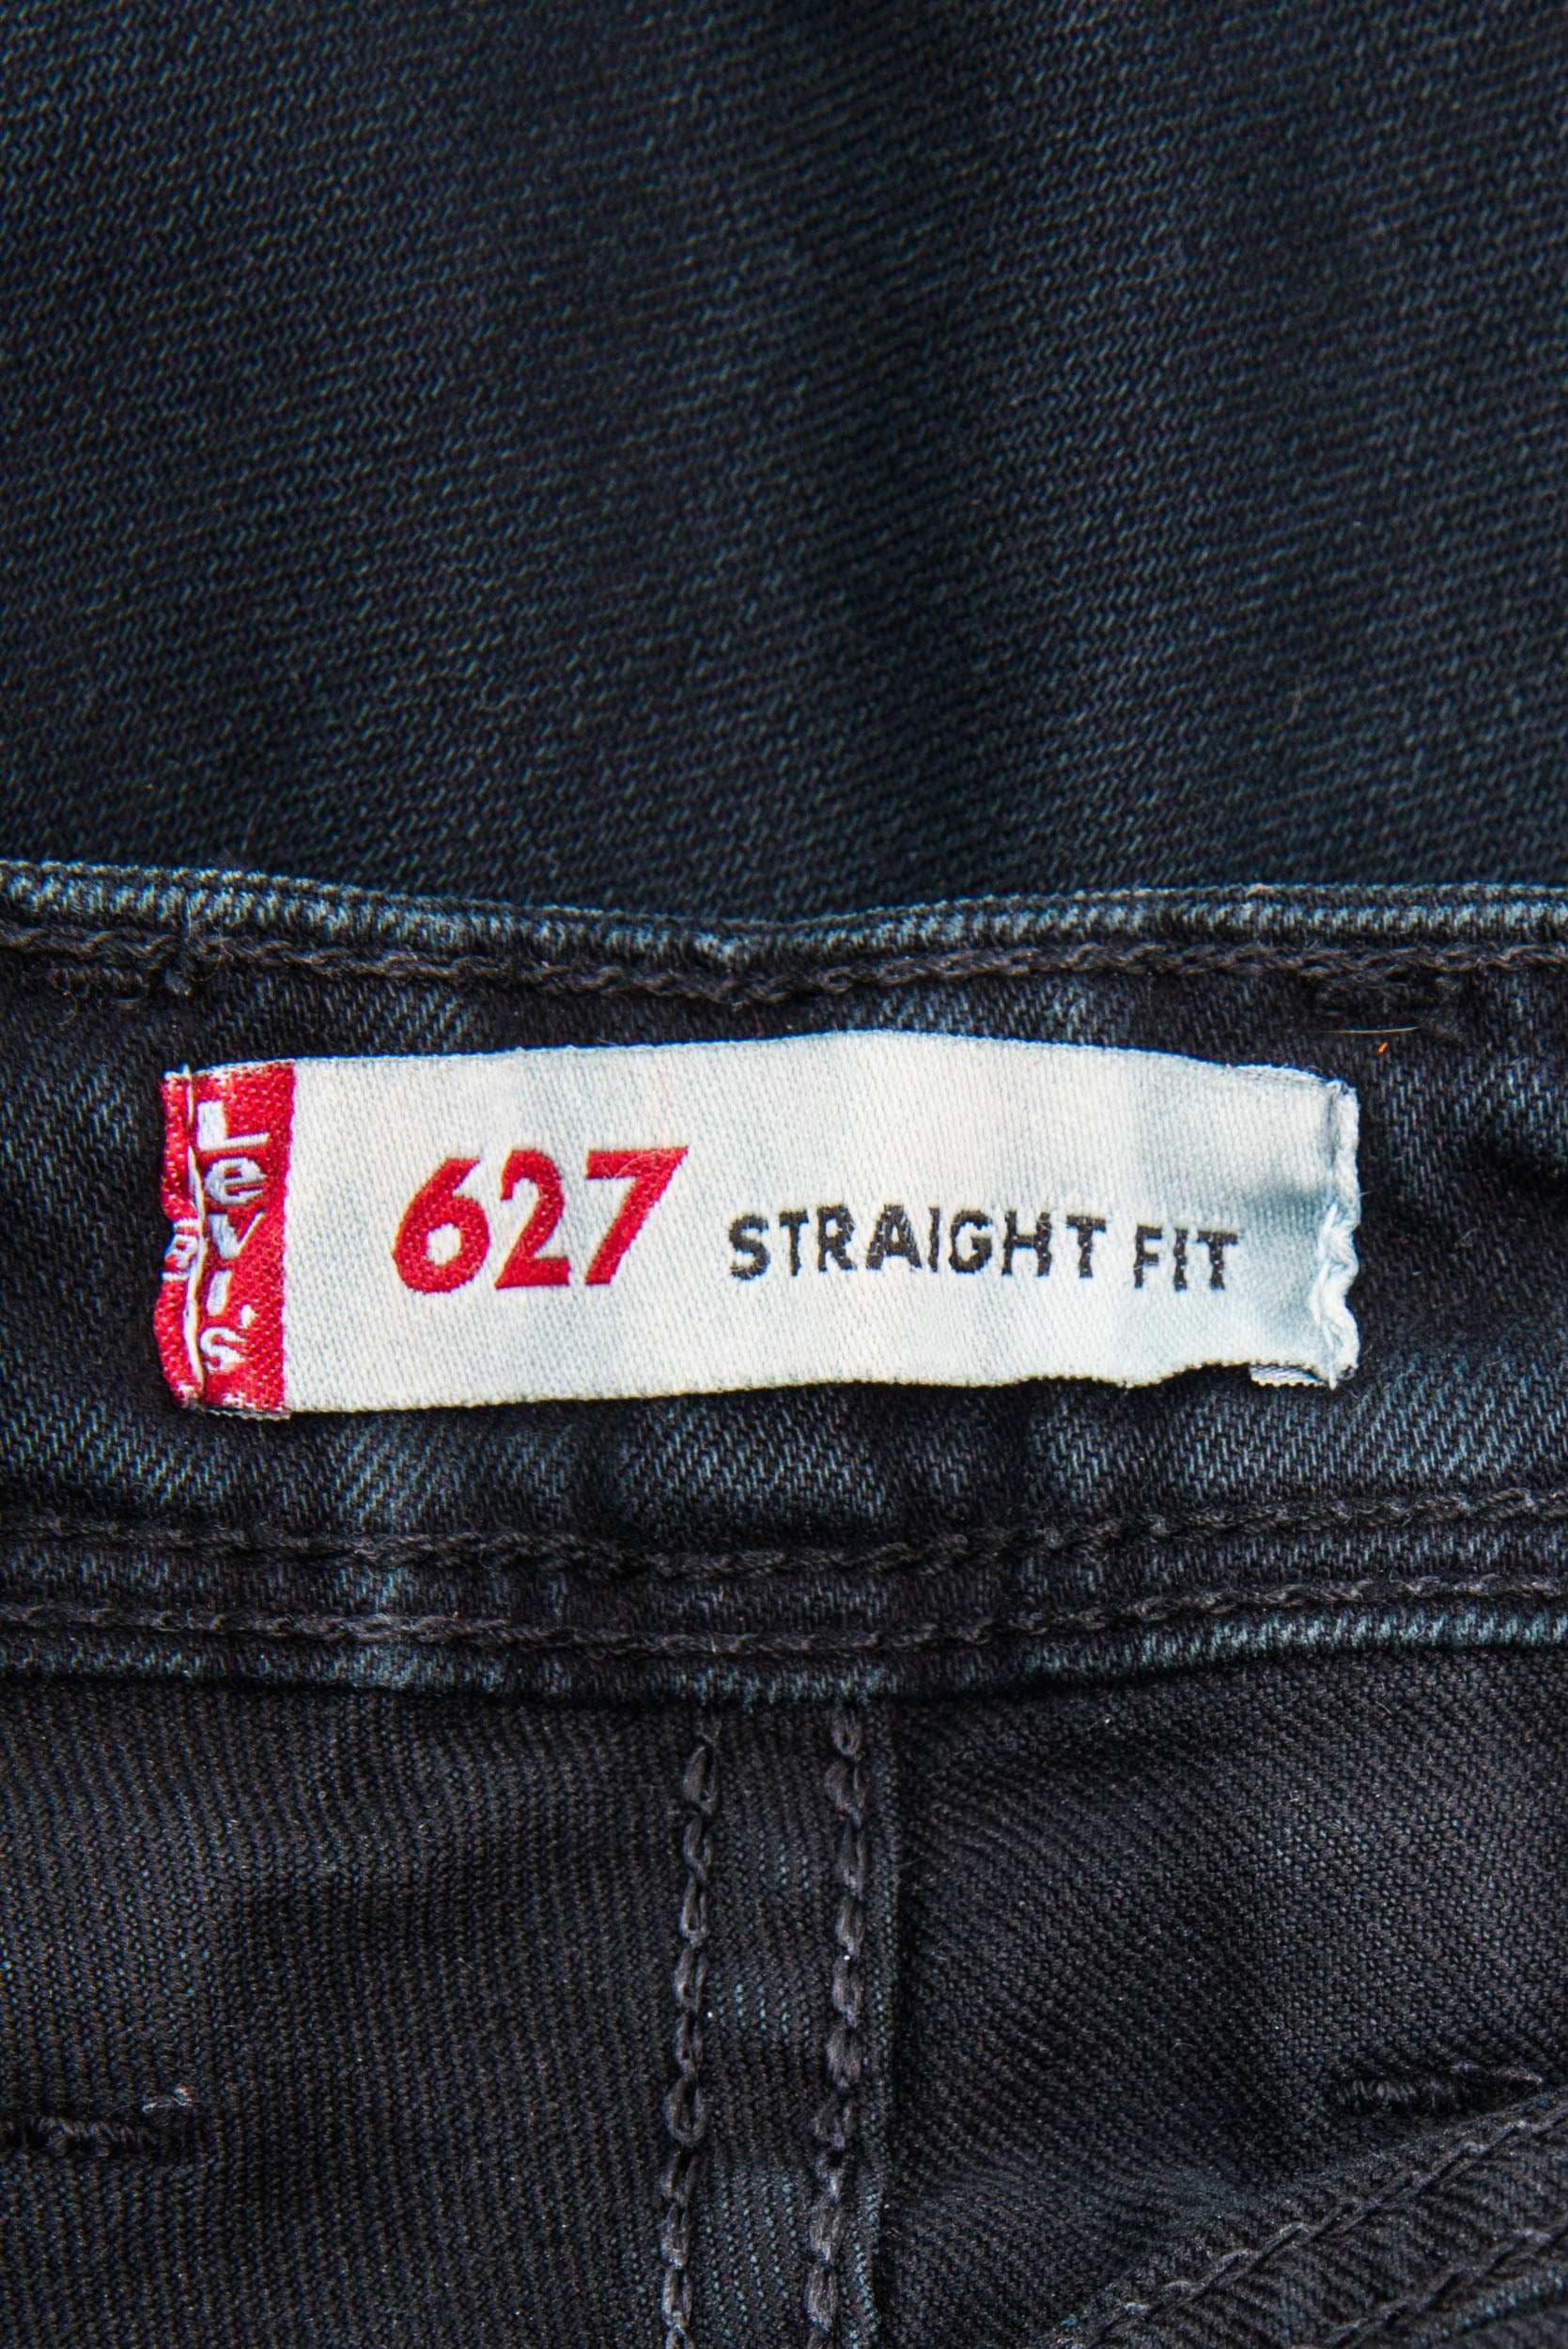 Vintage Black Levi's 627 Jeans | THE VINTAGE SCENE – The Vintage Scene